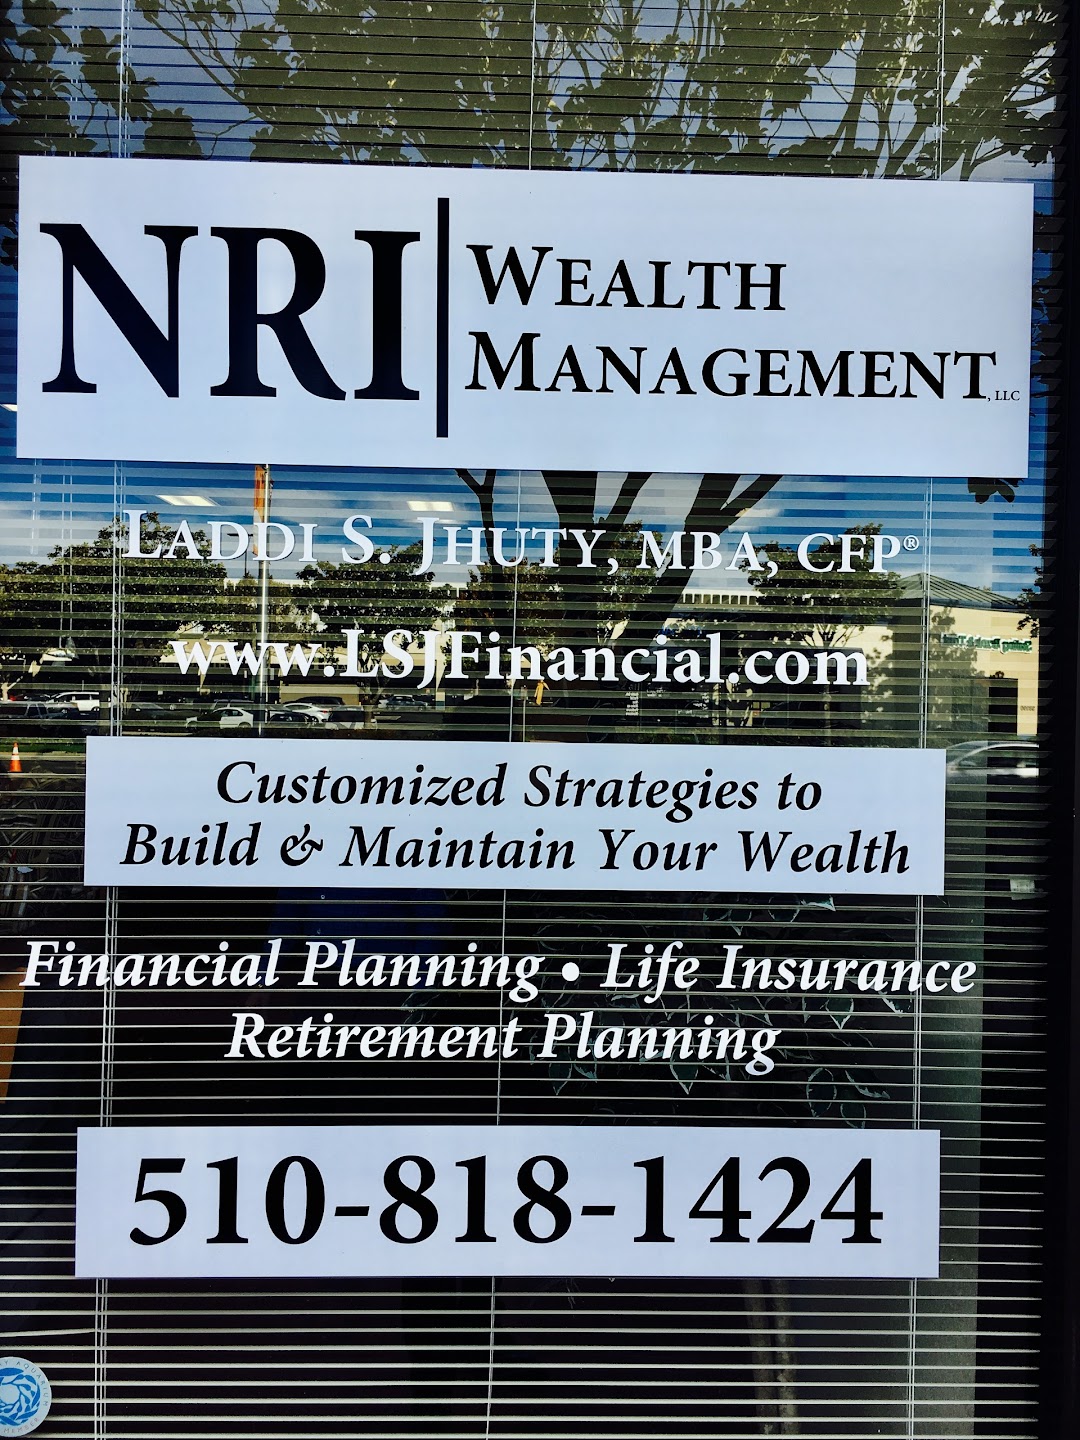 LSJ - NRI Wealth Management - Laddi Jhuty, MBA, CFP(R)